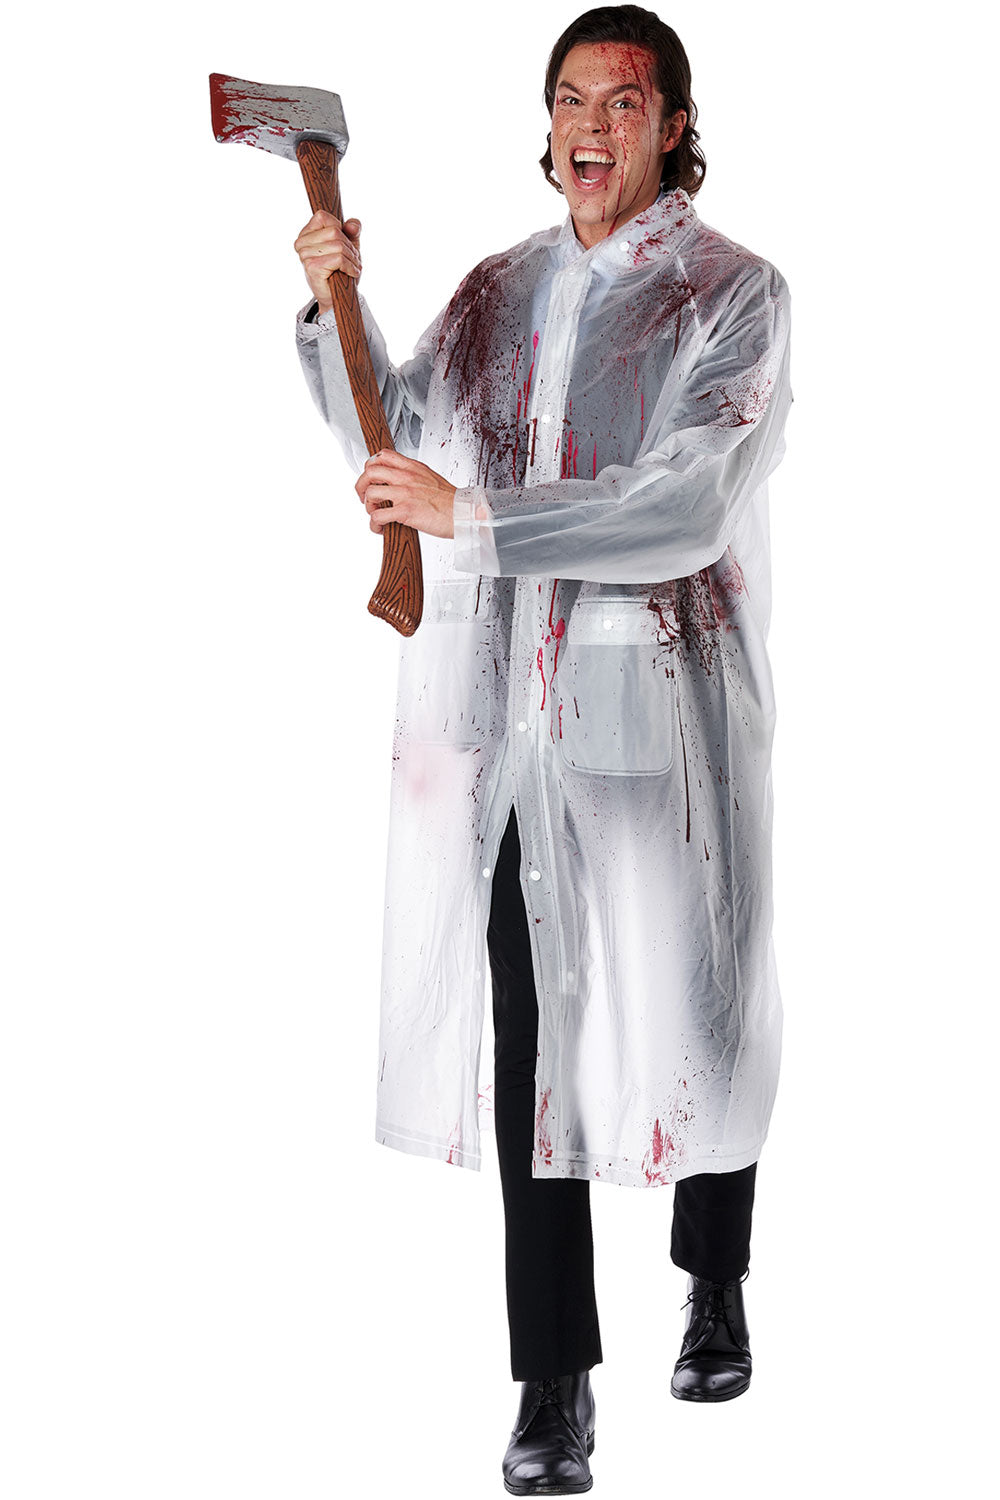 Yuppie Psycho Killer / Adult California Costume 5121-188